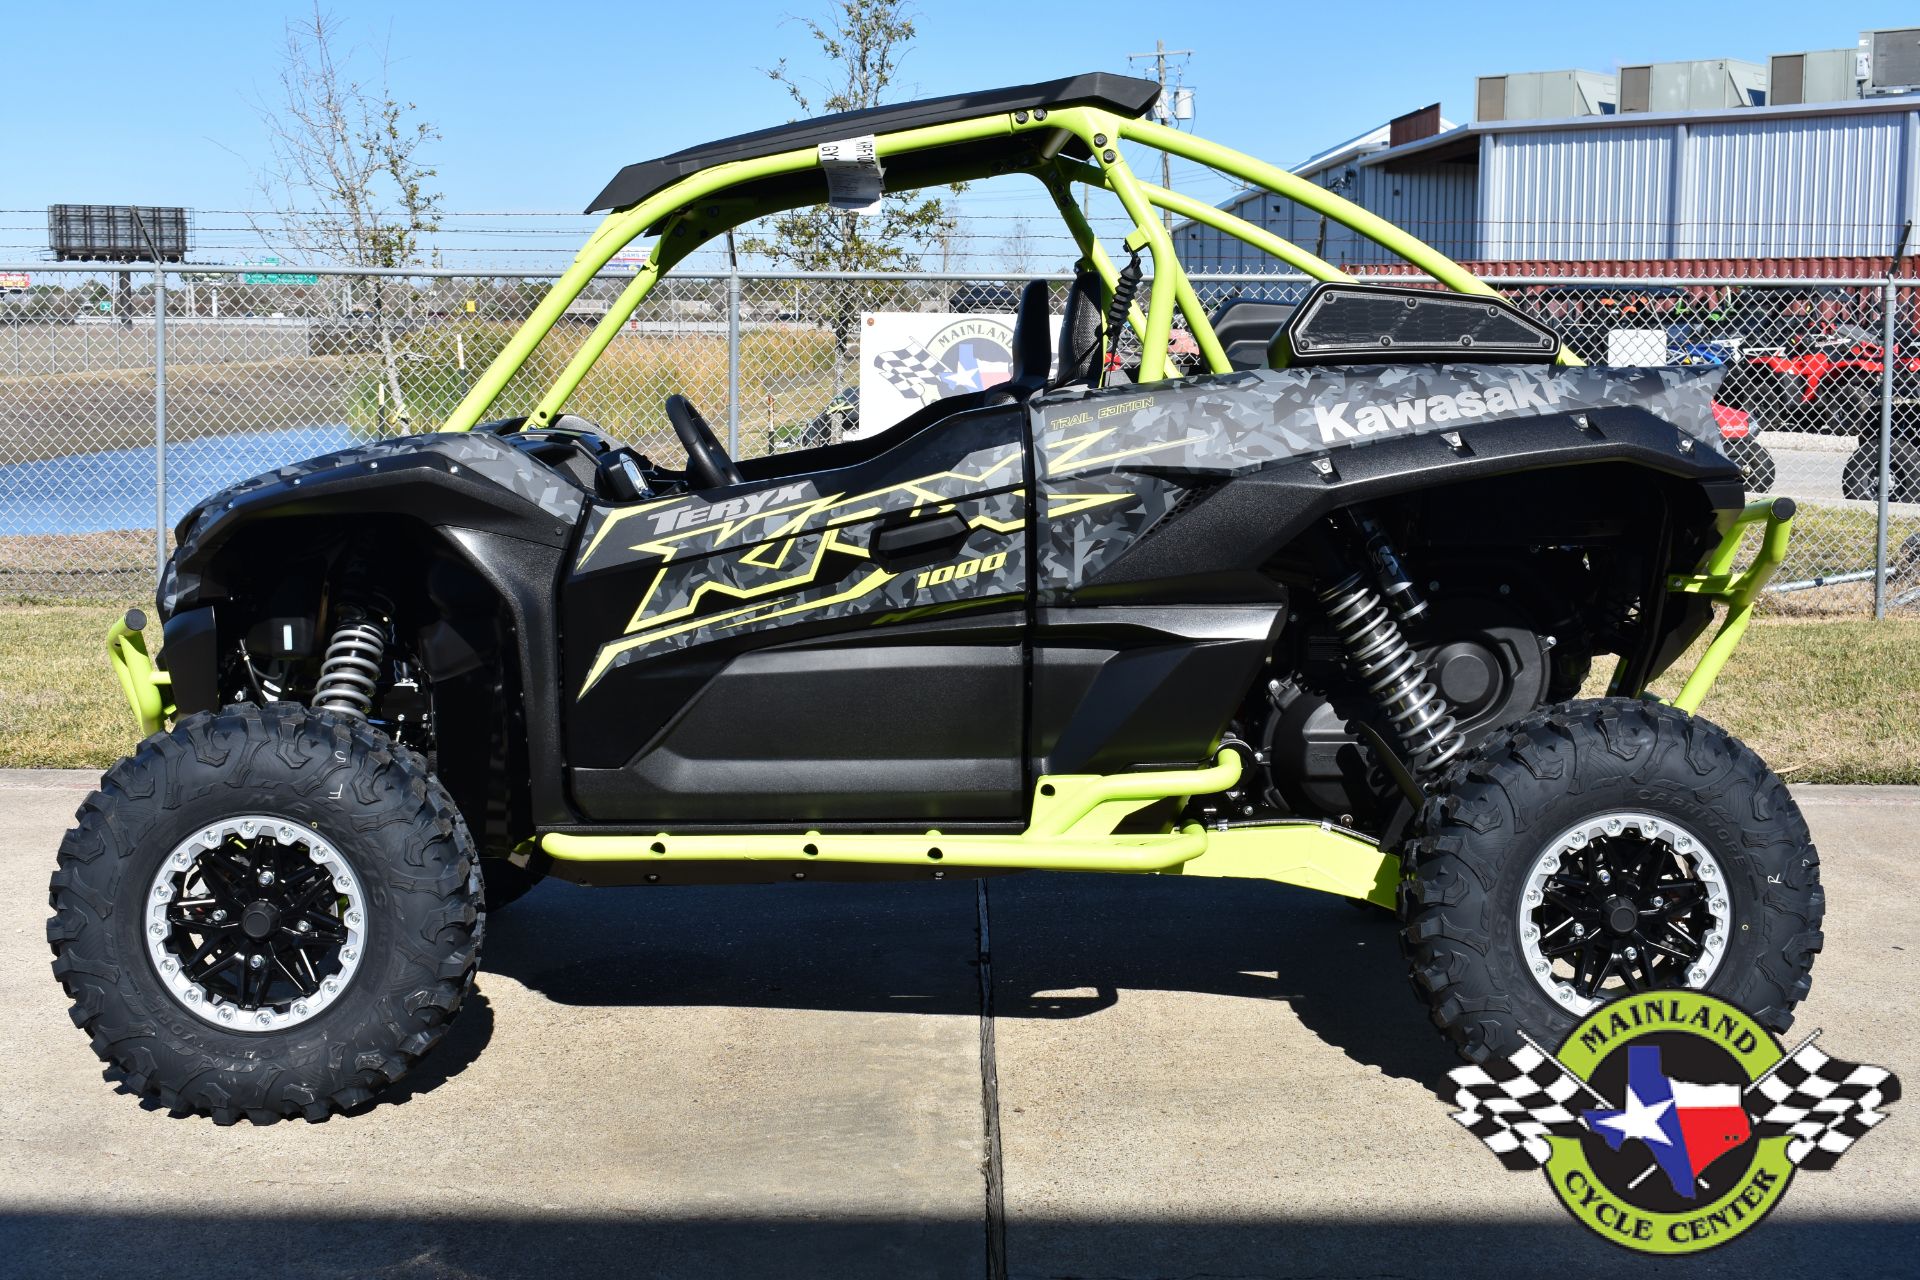 2021 Kawasaki Teryx KRX 1000 Trail Edition in La Marque, Texas - Photo 4